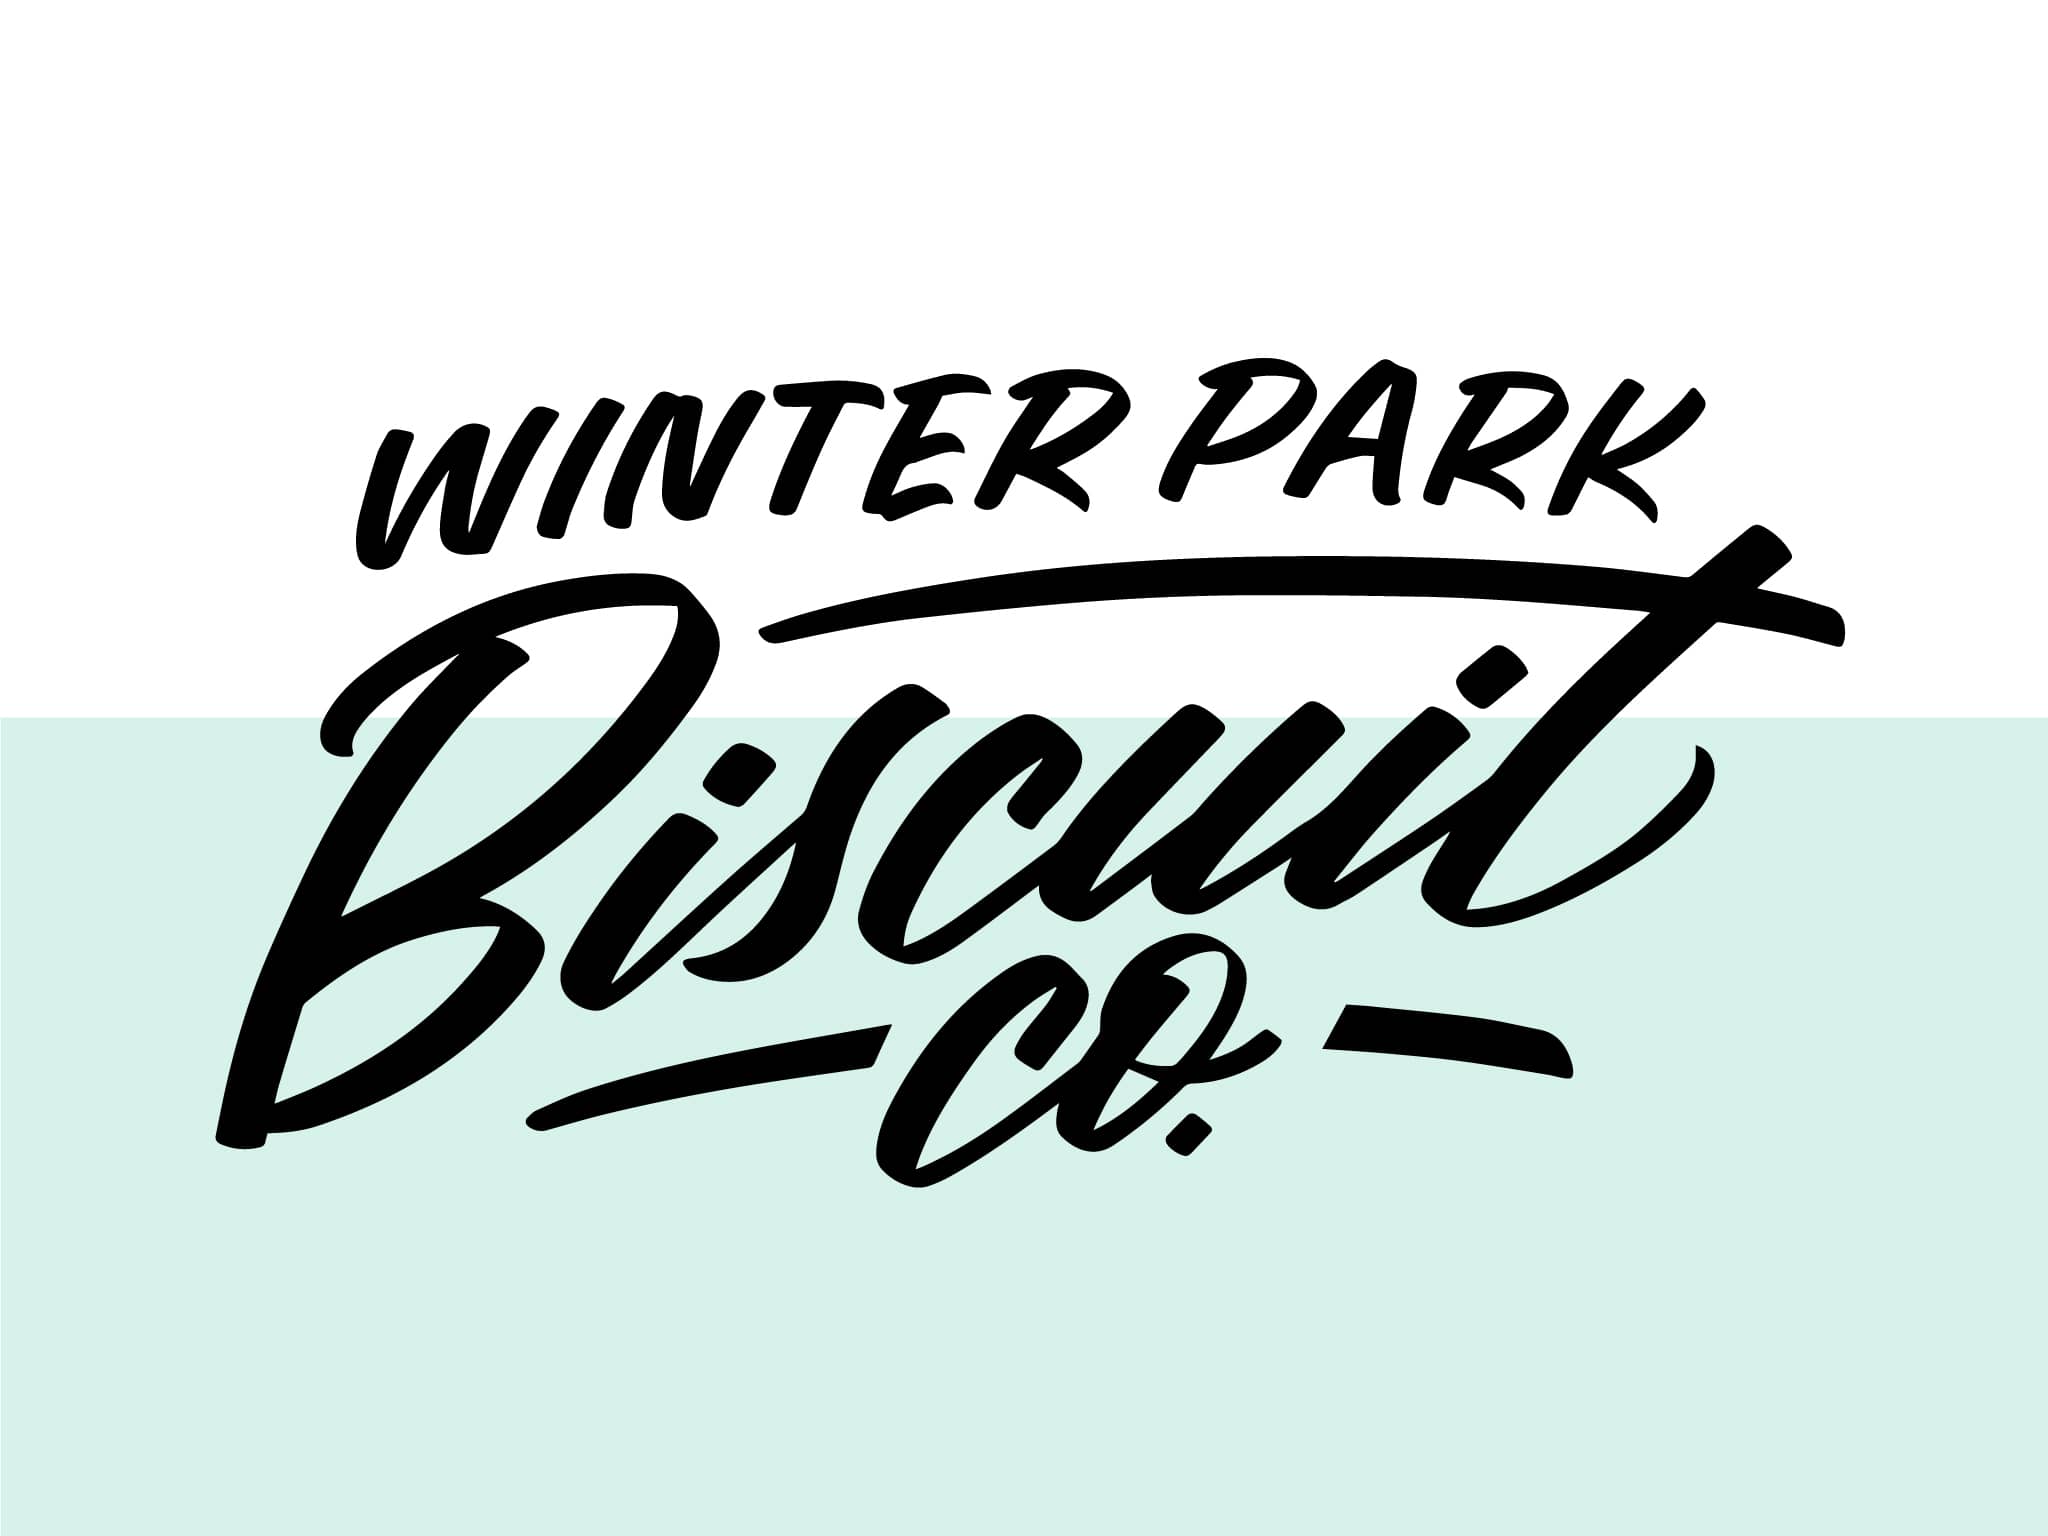 Winter Park Biscuit Co. hand lettered brush lettering logo